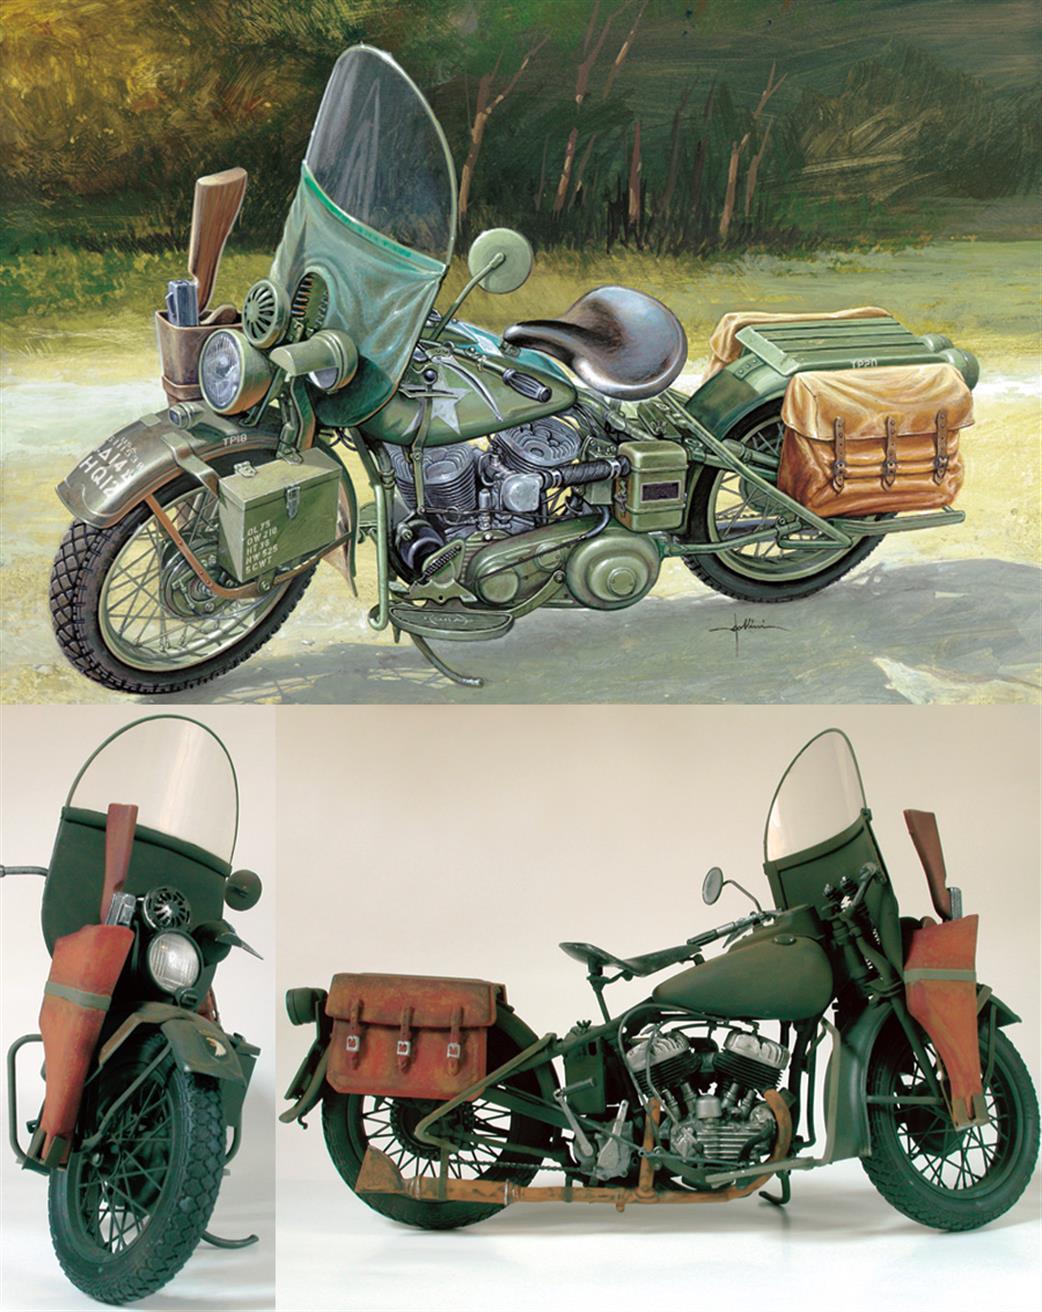 Italeri 1/9 7401 US Army WWII Motorcycle Kit